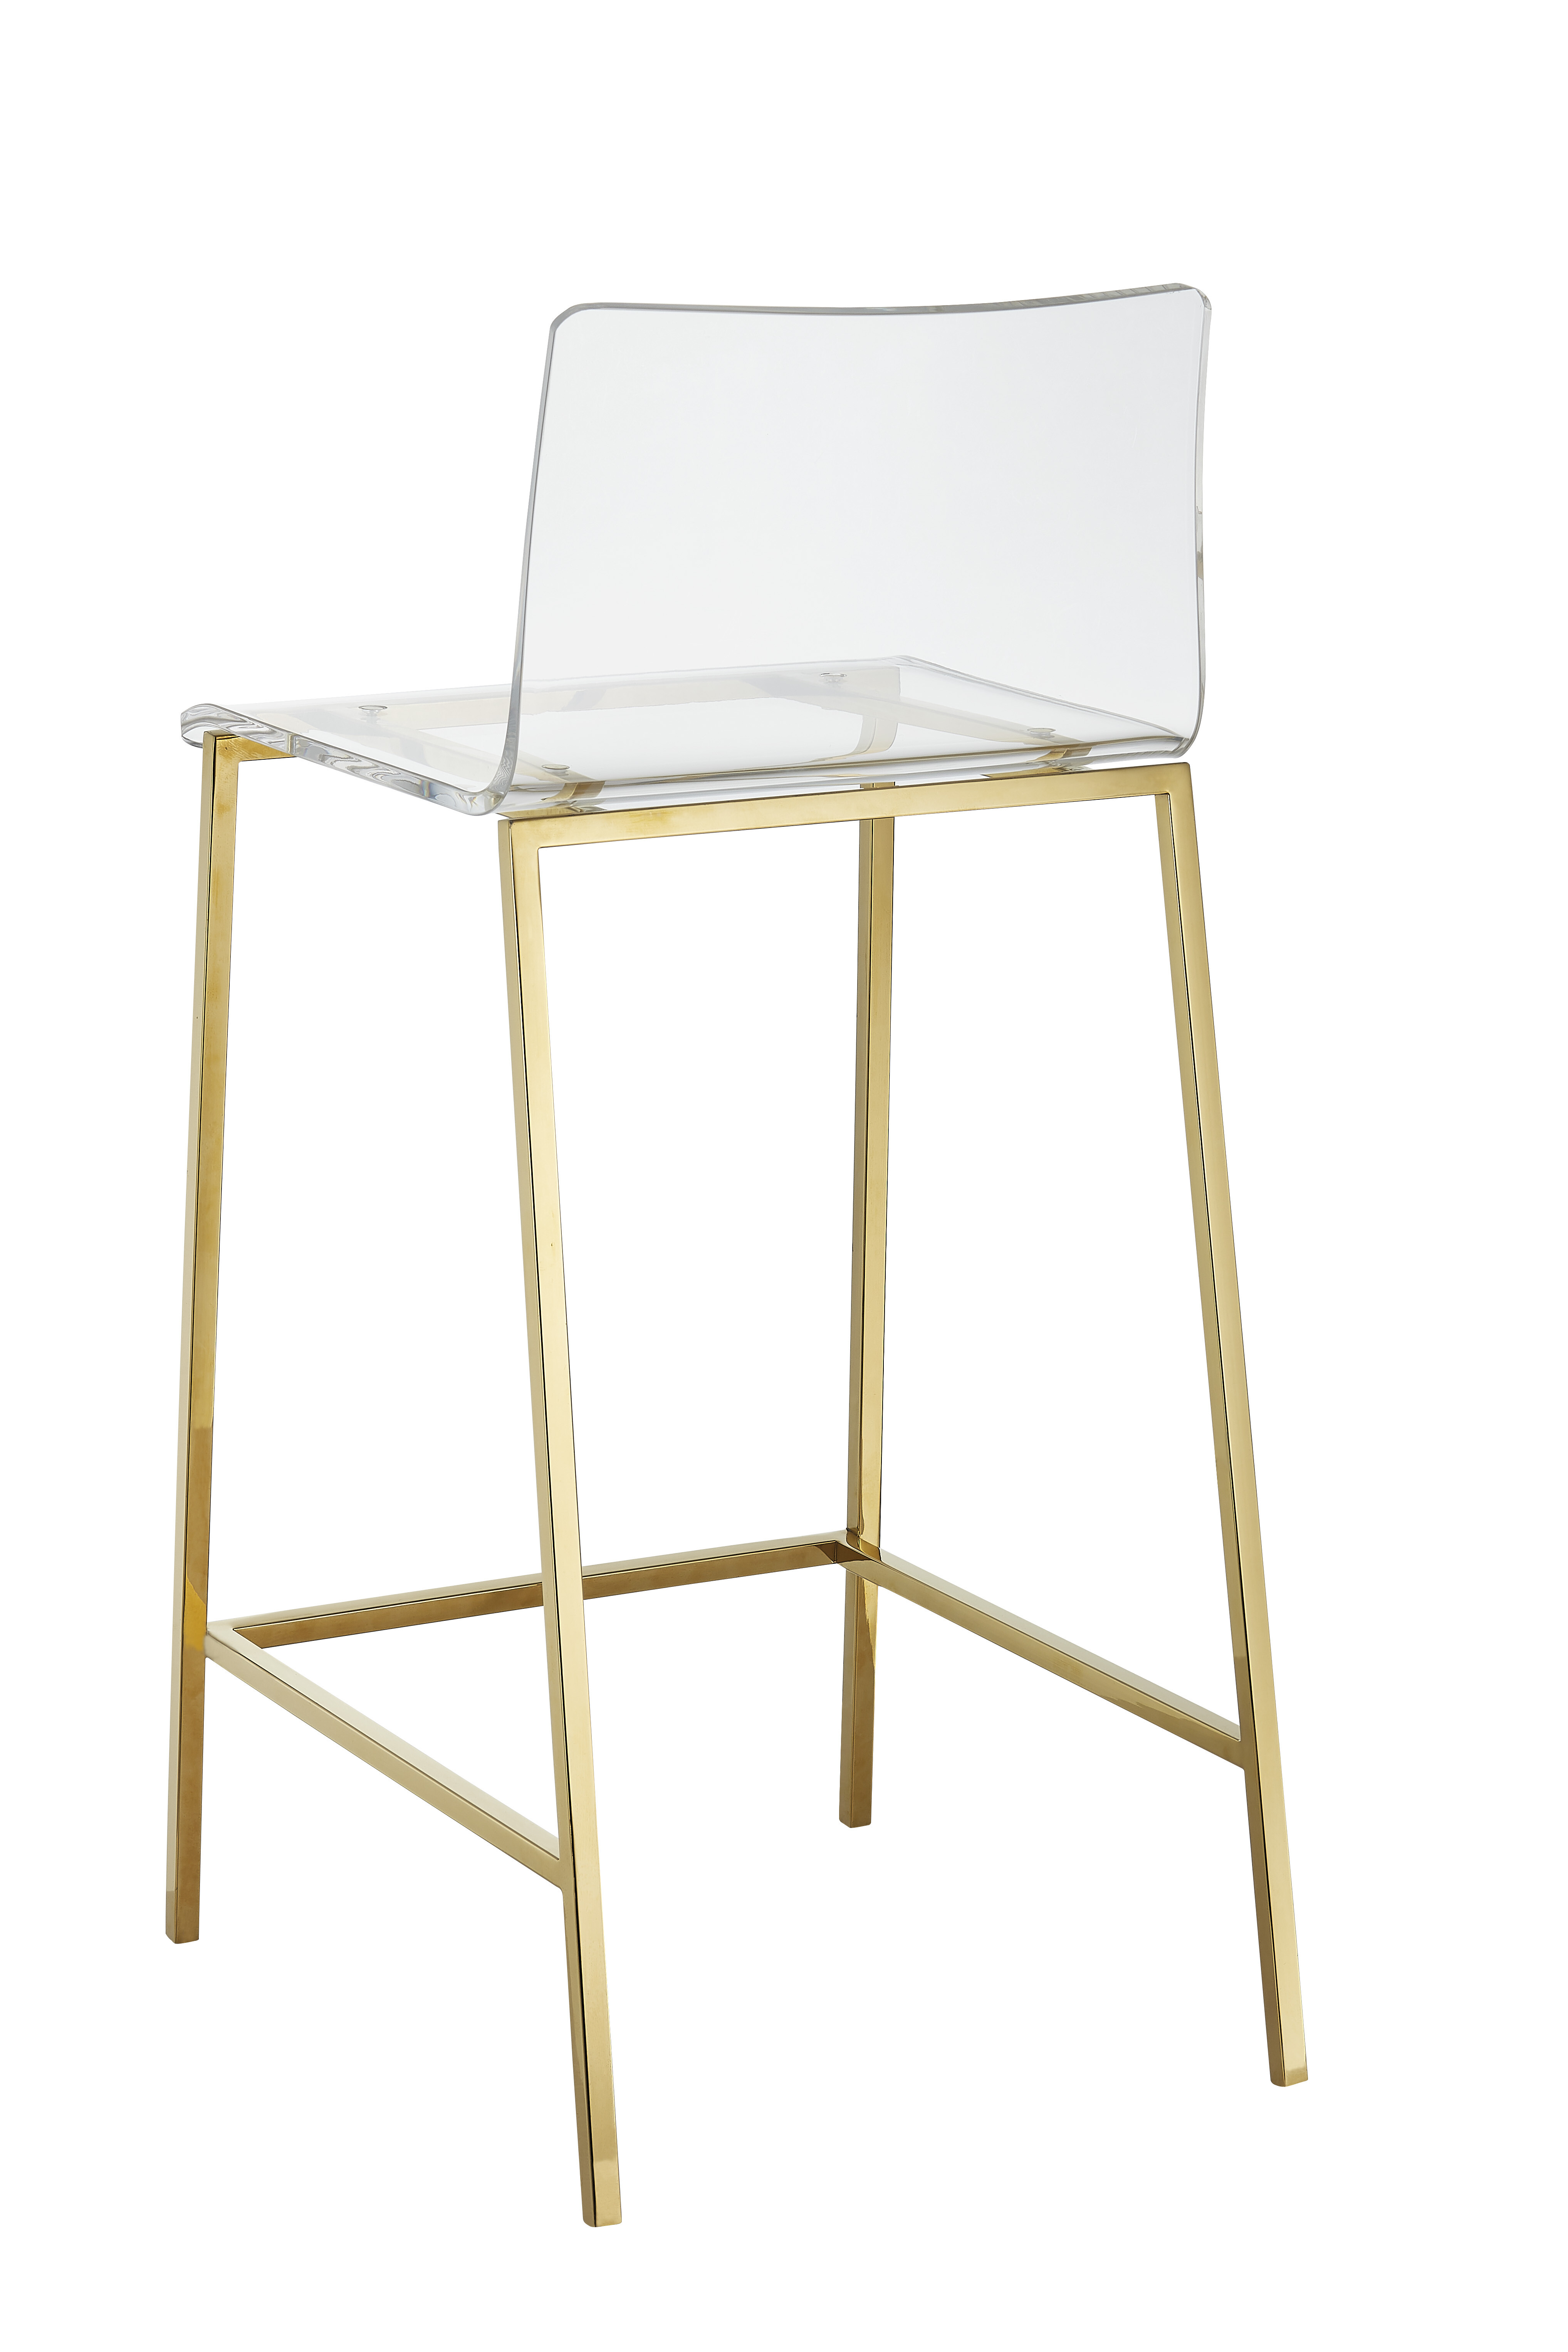 High quality clear acrylic bar stool with metal base.